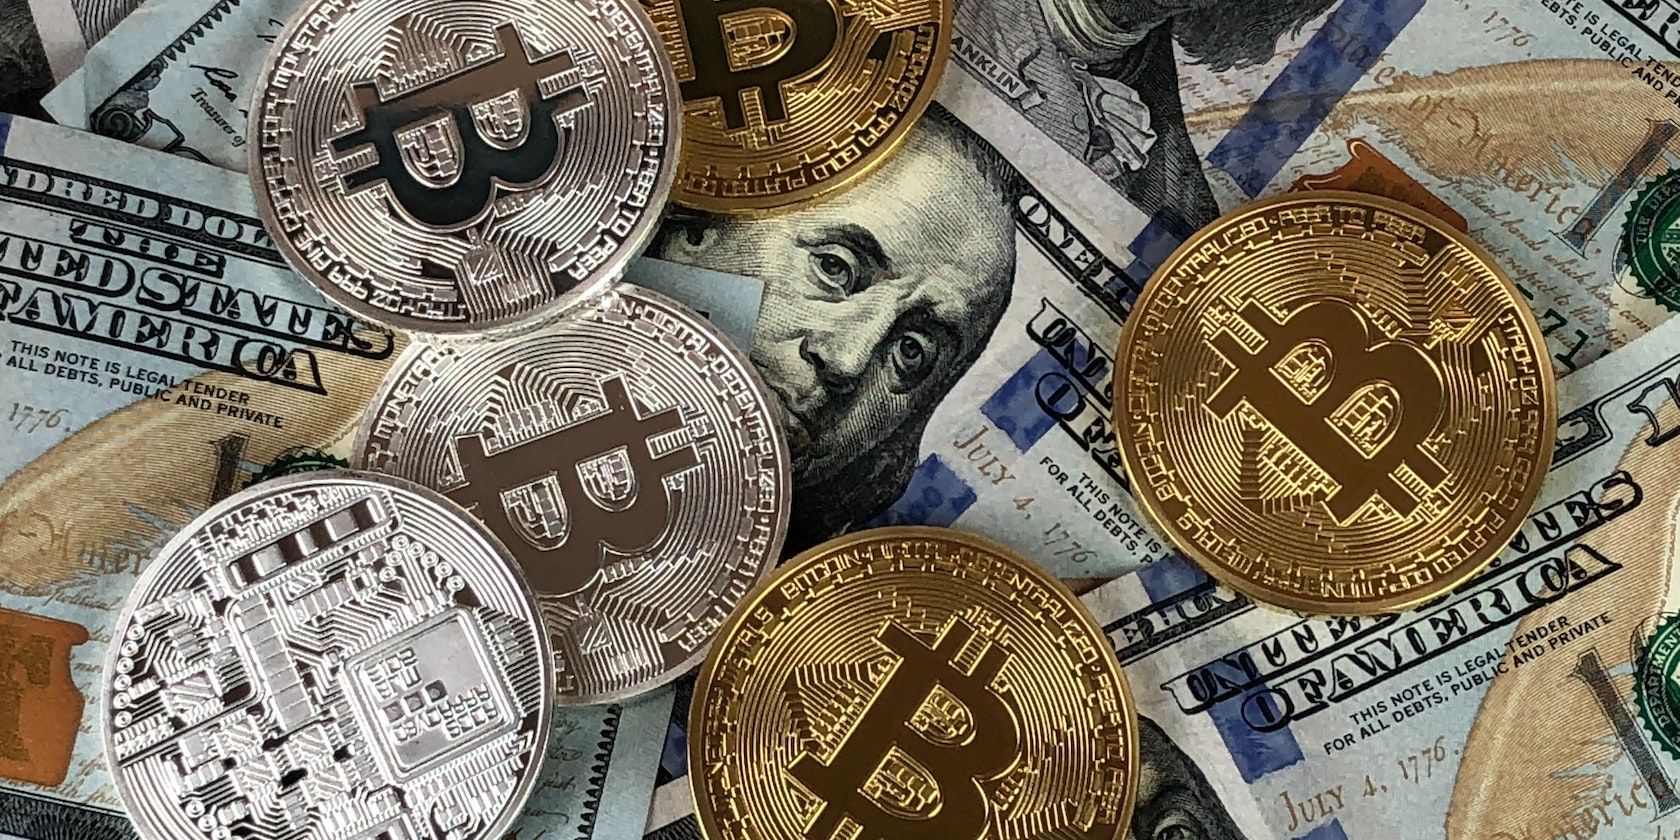 Bitcoin tokens and dollars